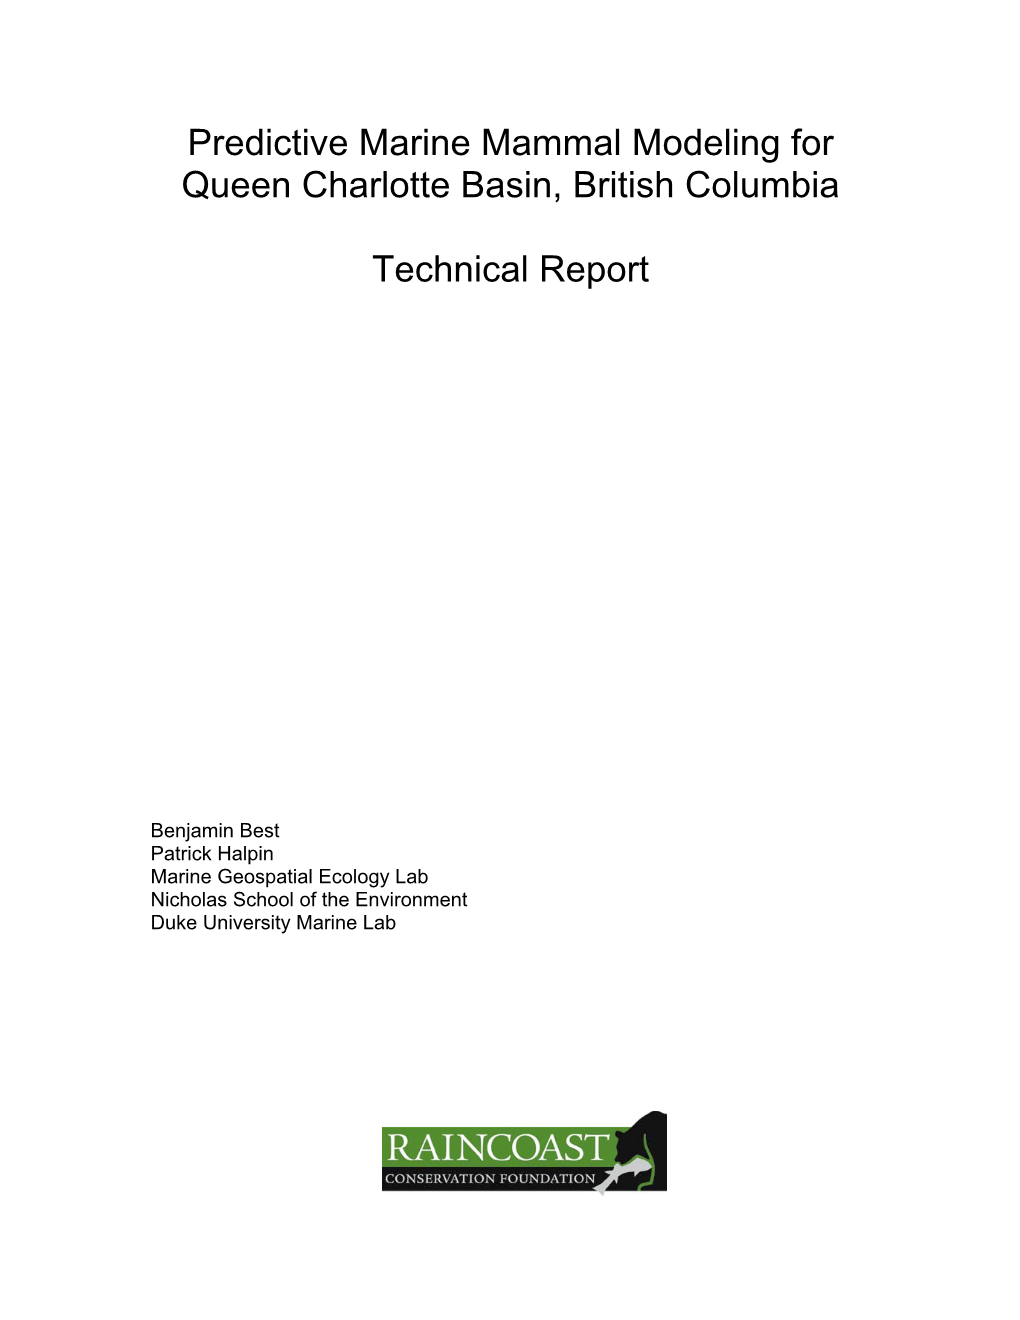 Predictive Marine Mammal Modeling for Queen Charlotte Basin, British Columbia